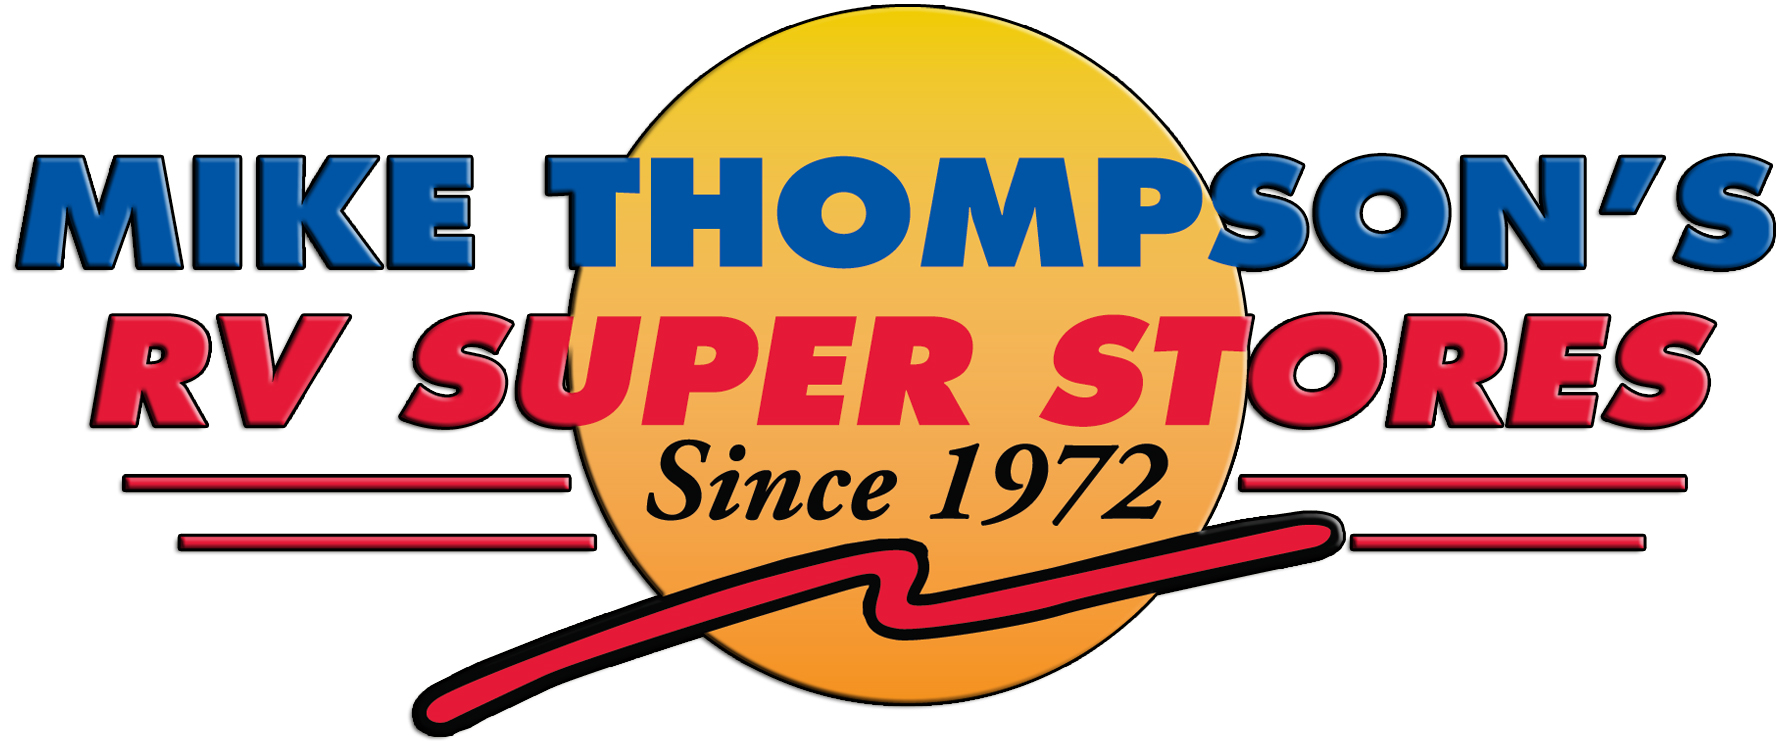 Mike Thompson's RV Super Stores Company Logo